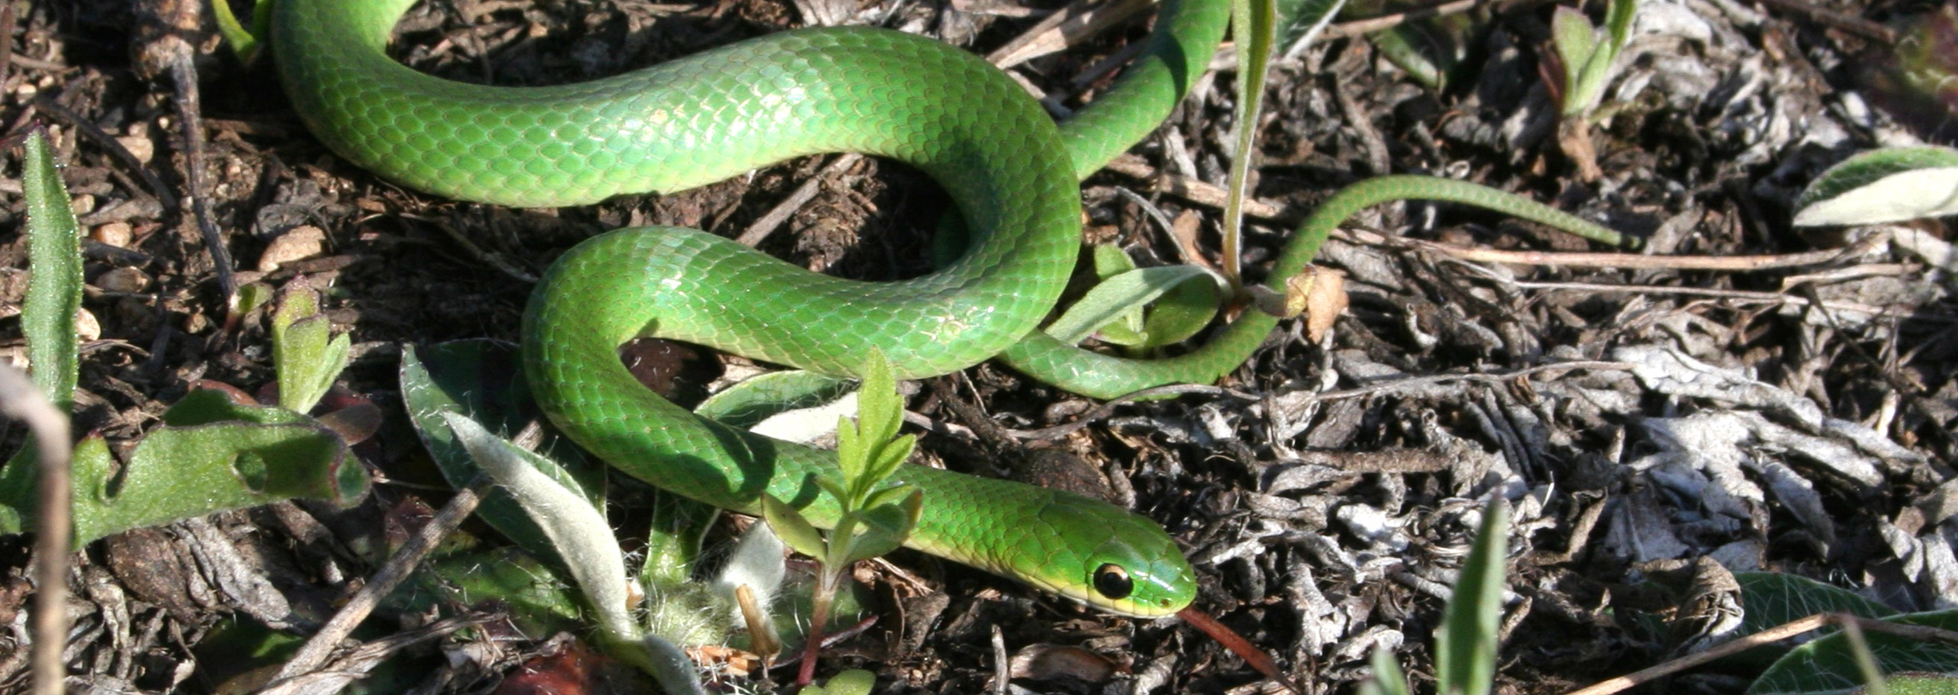 Smooth Greensnake, Reptiles & Amphibians in Ontario